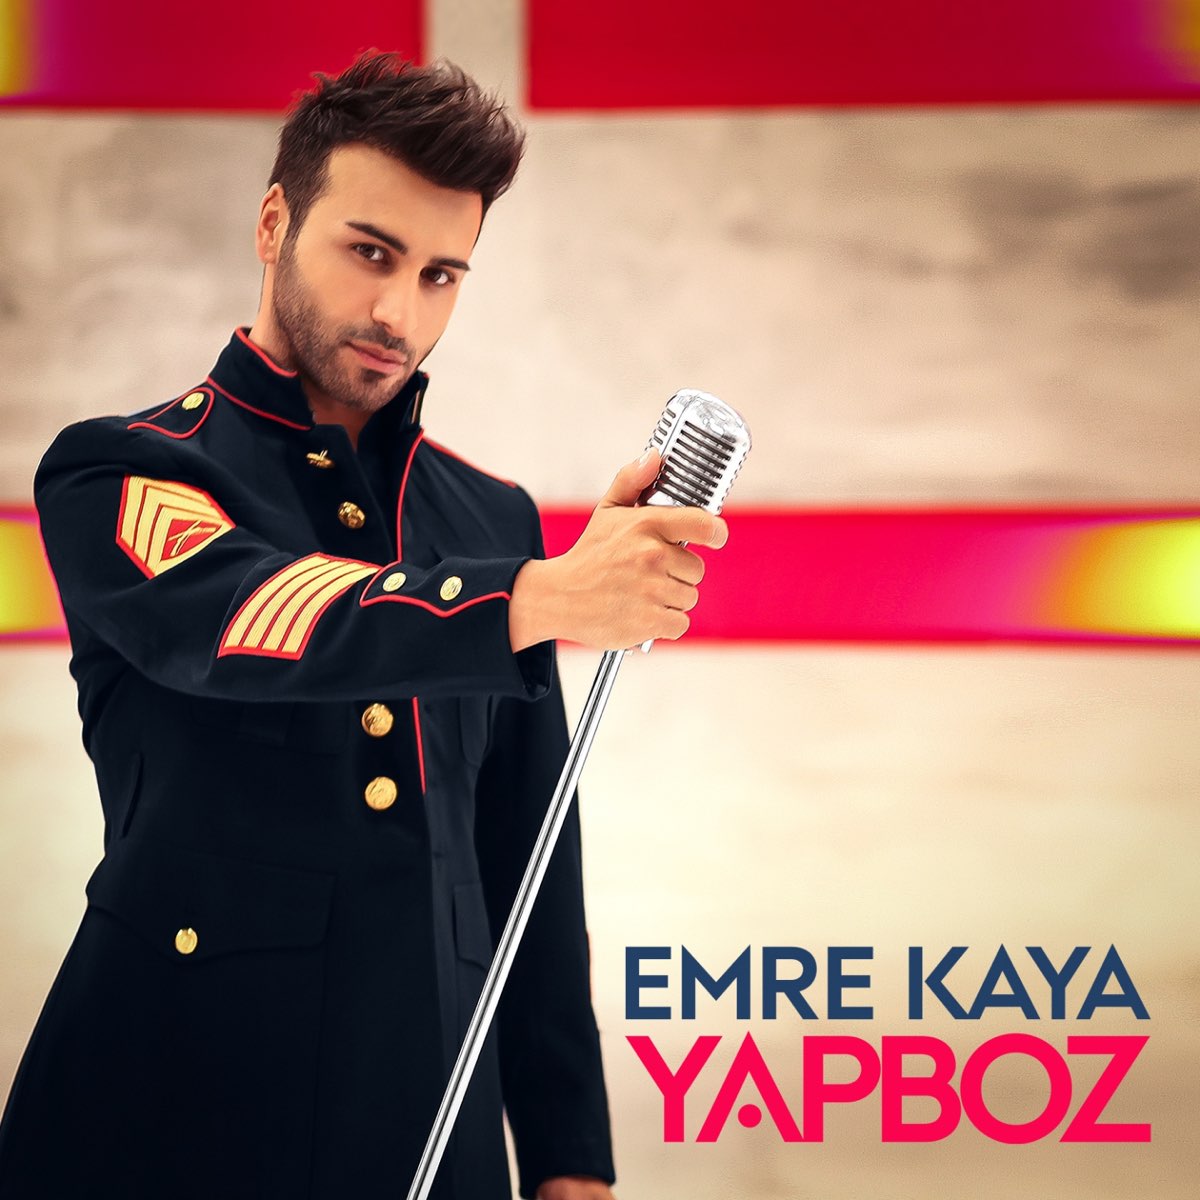 Yapboz - Single - Album by Emre Kaya - Apple Music